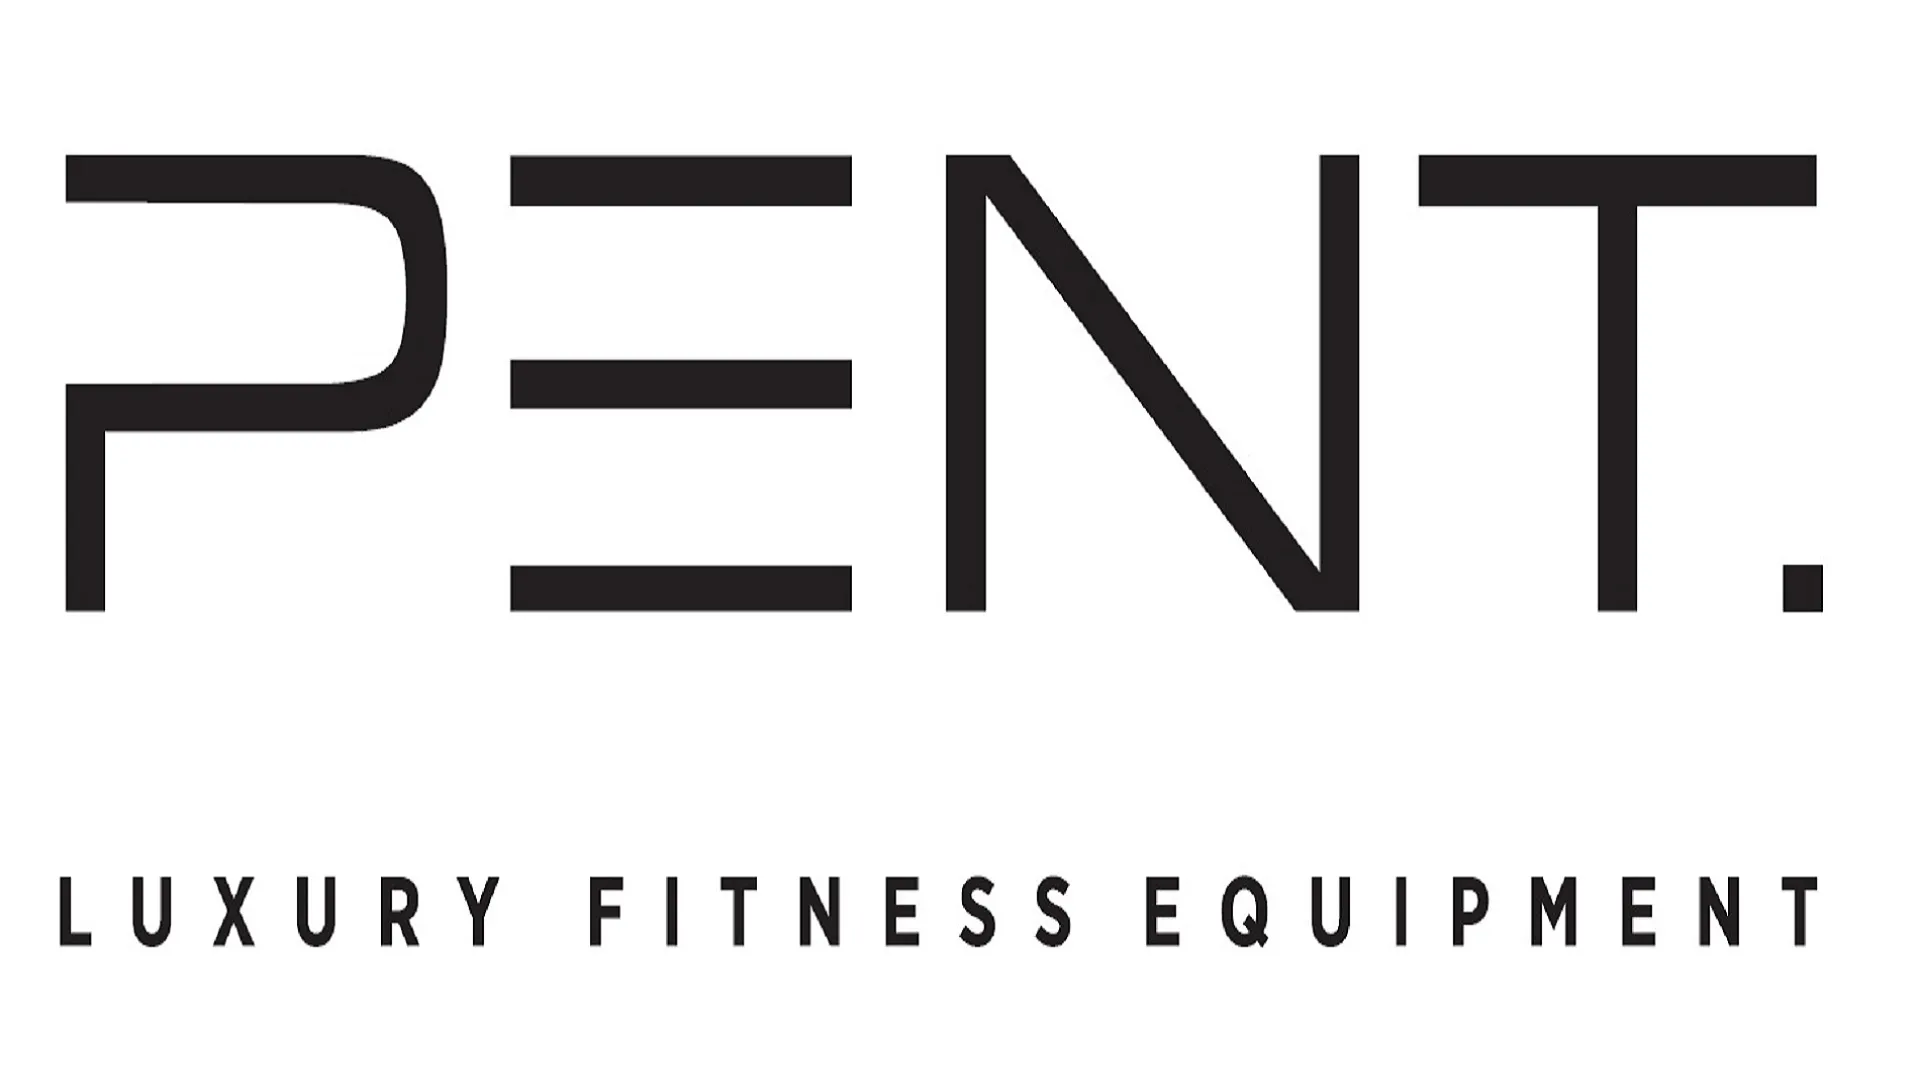 PENT - Luxury Fitness Equipment